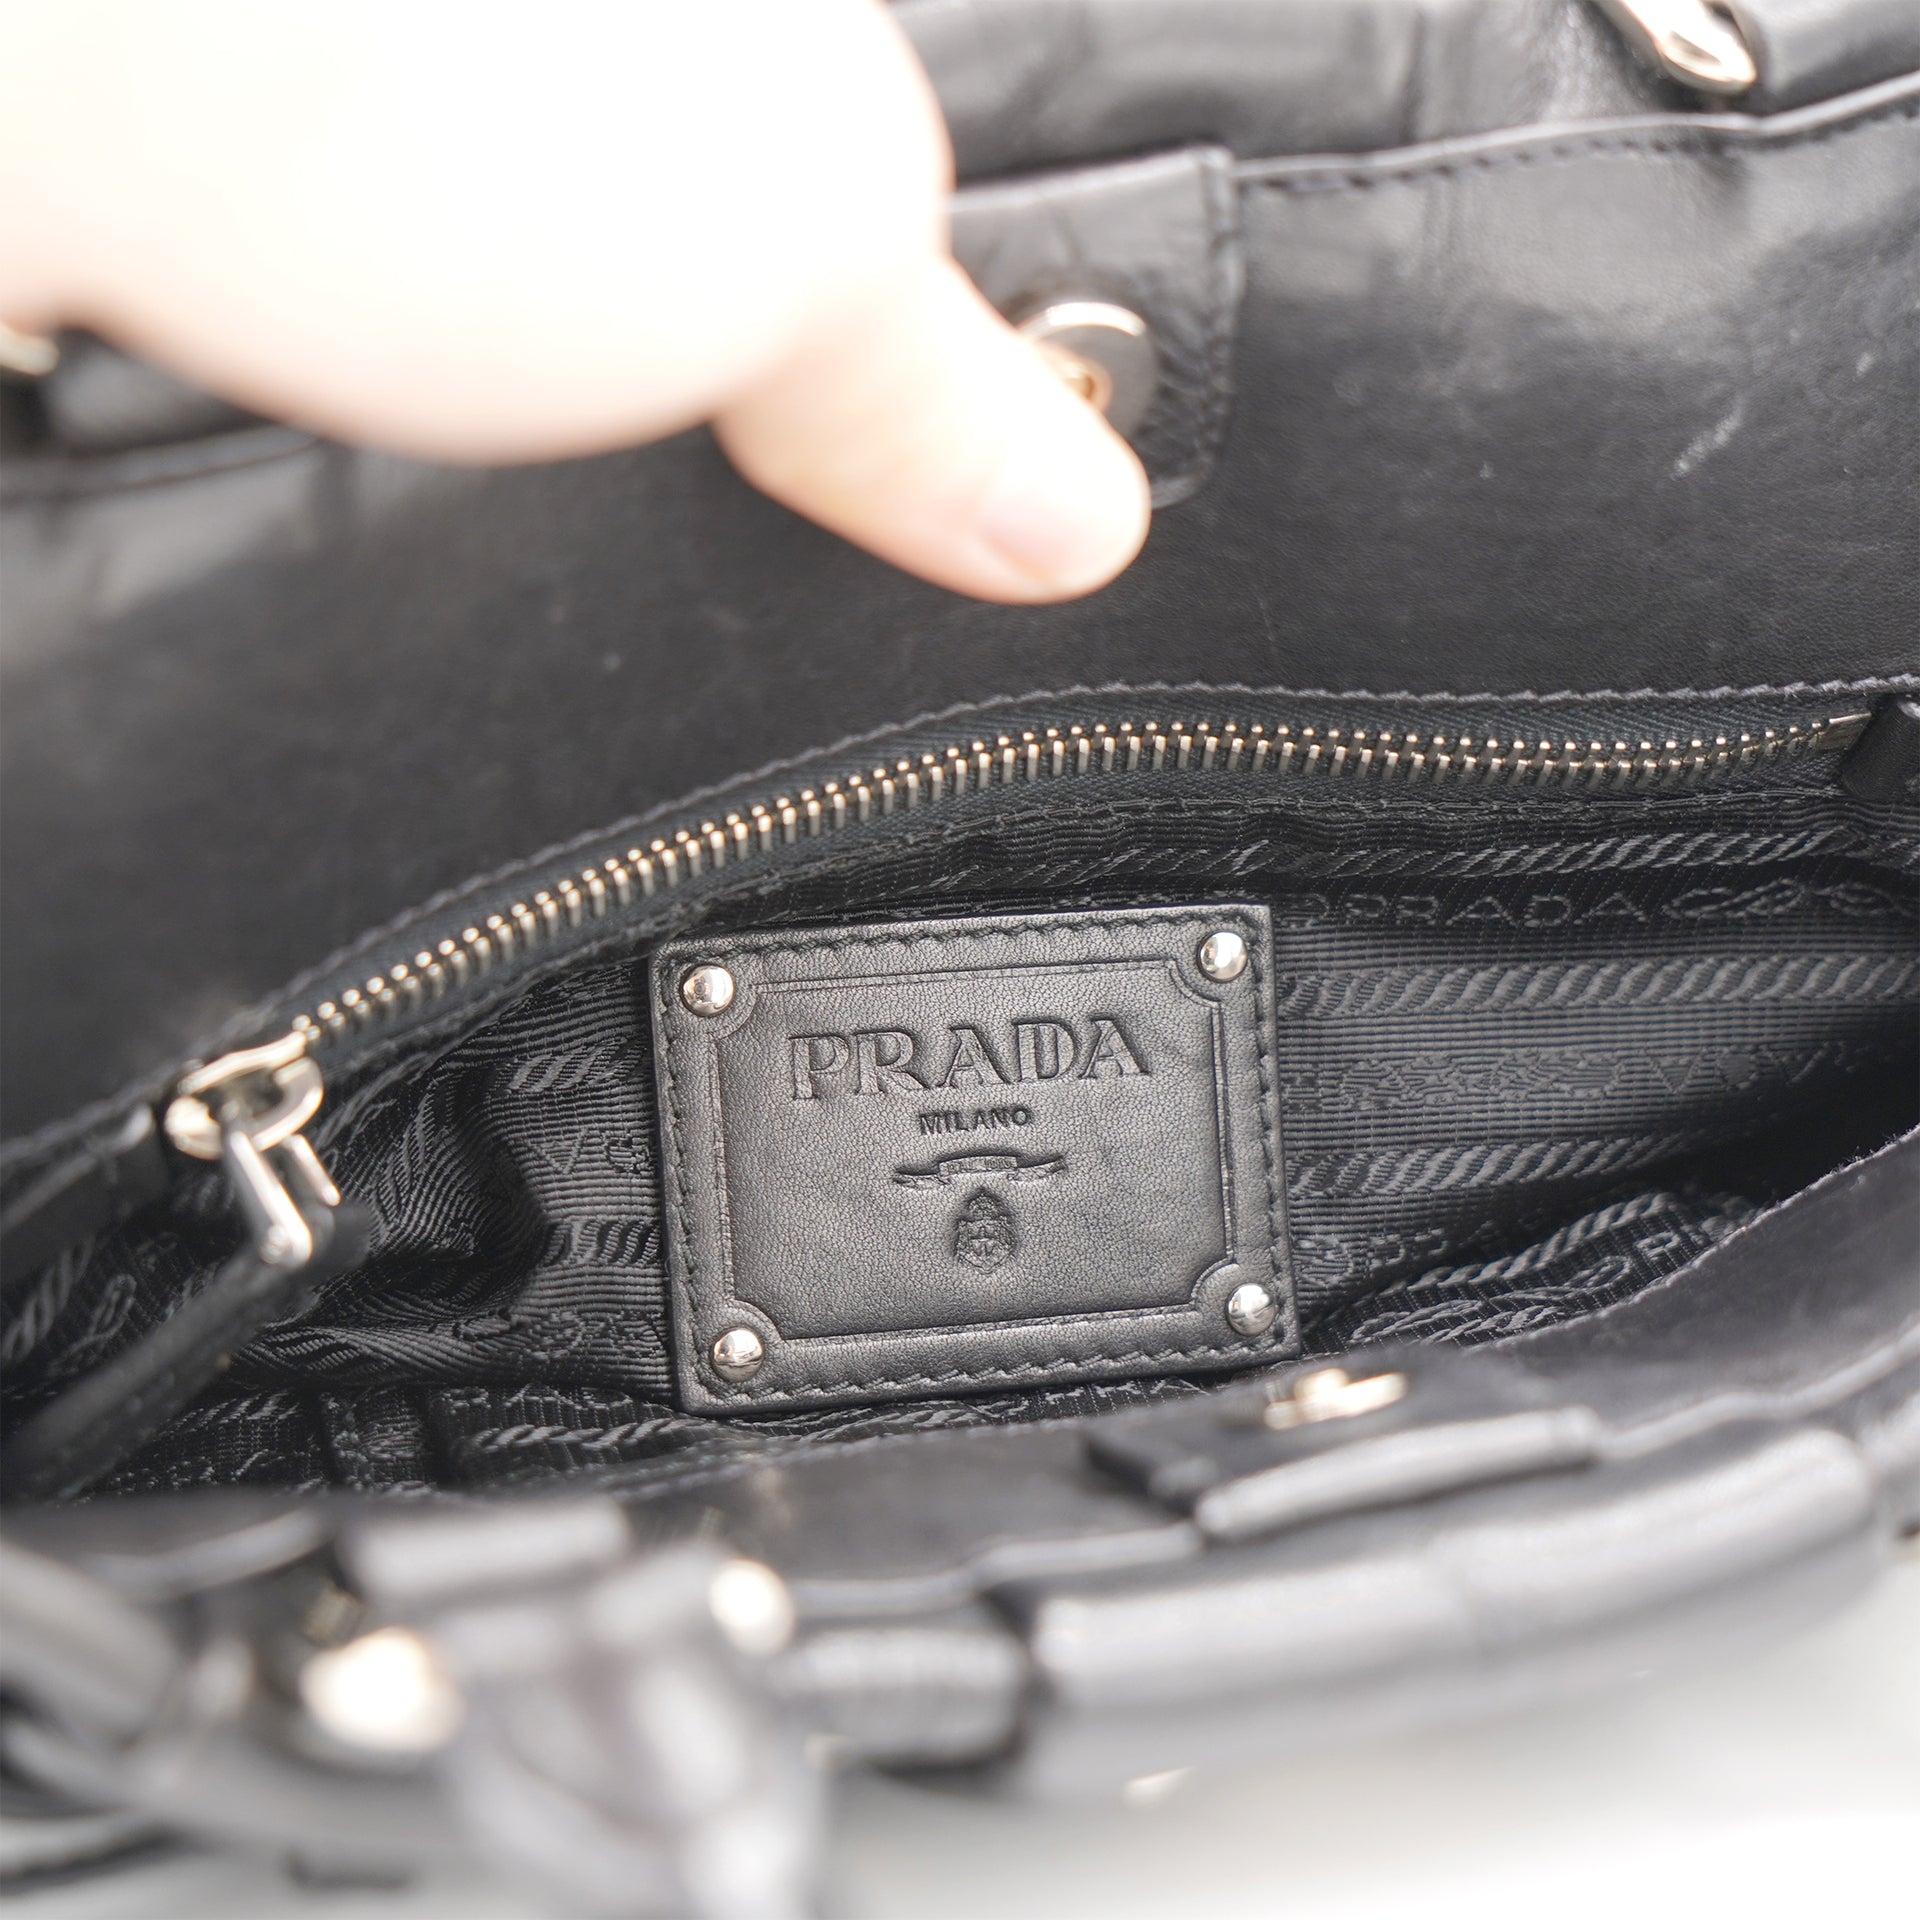 PRADA Vitello Daino Leather Shopping Tote Bag Black-US